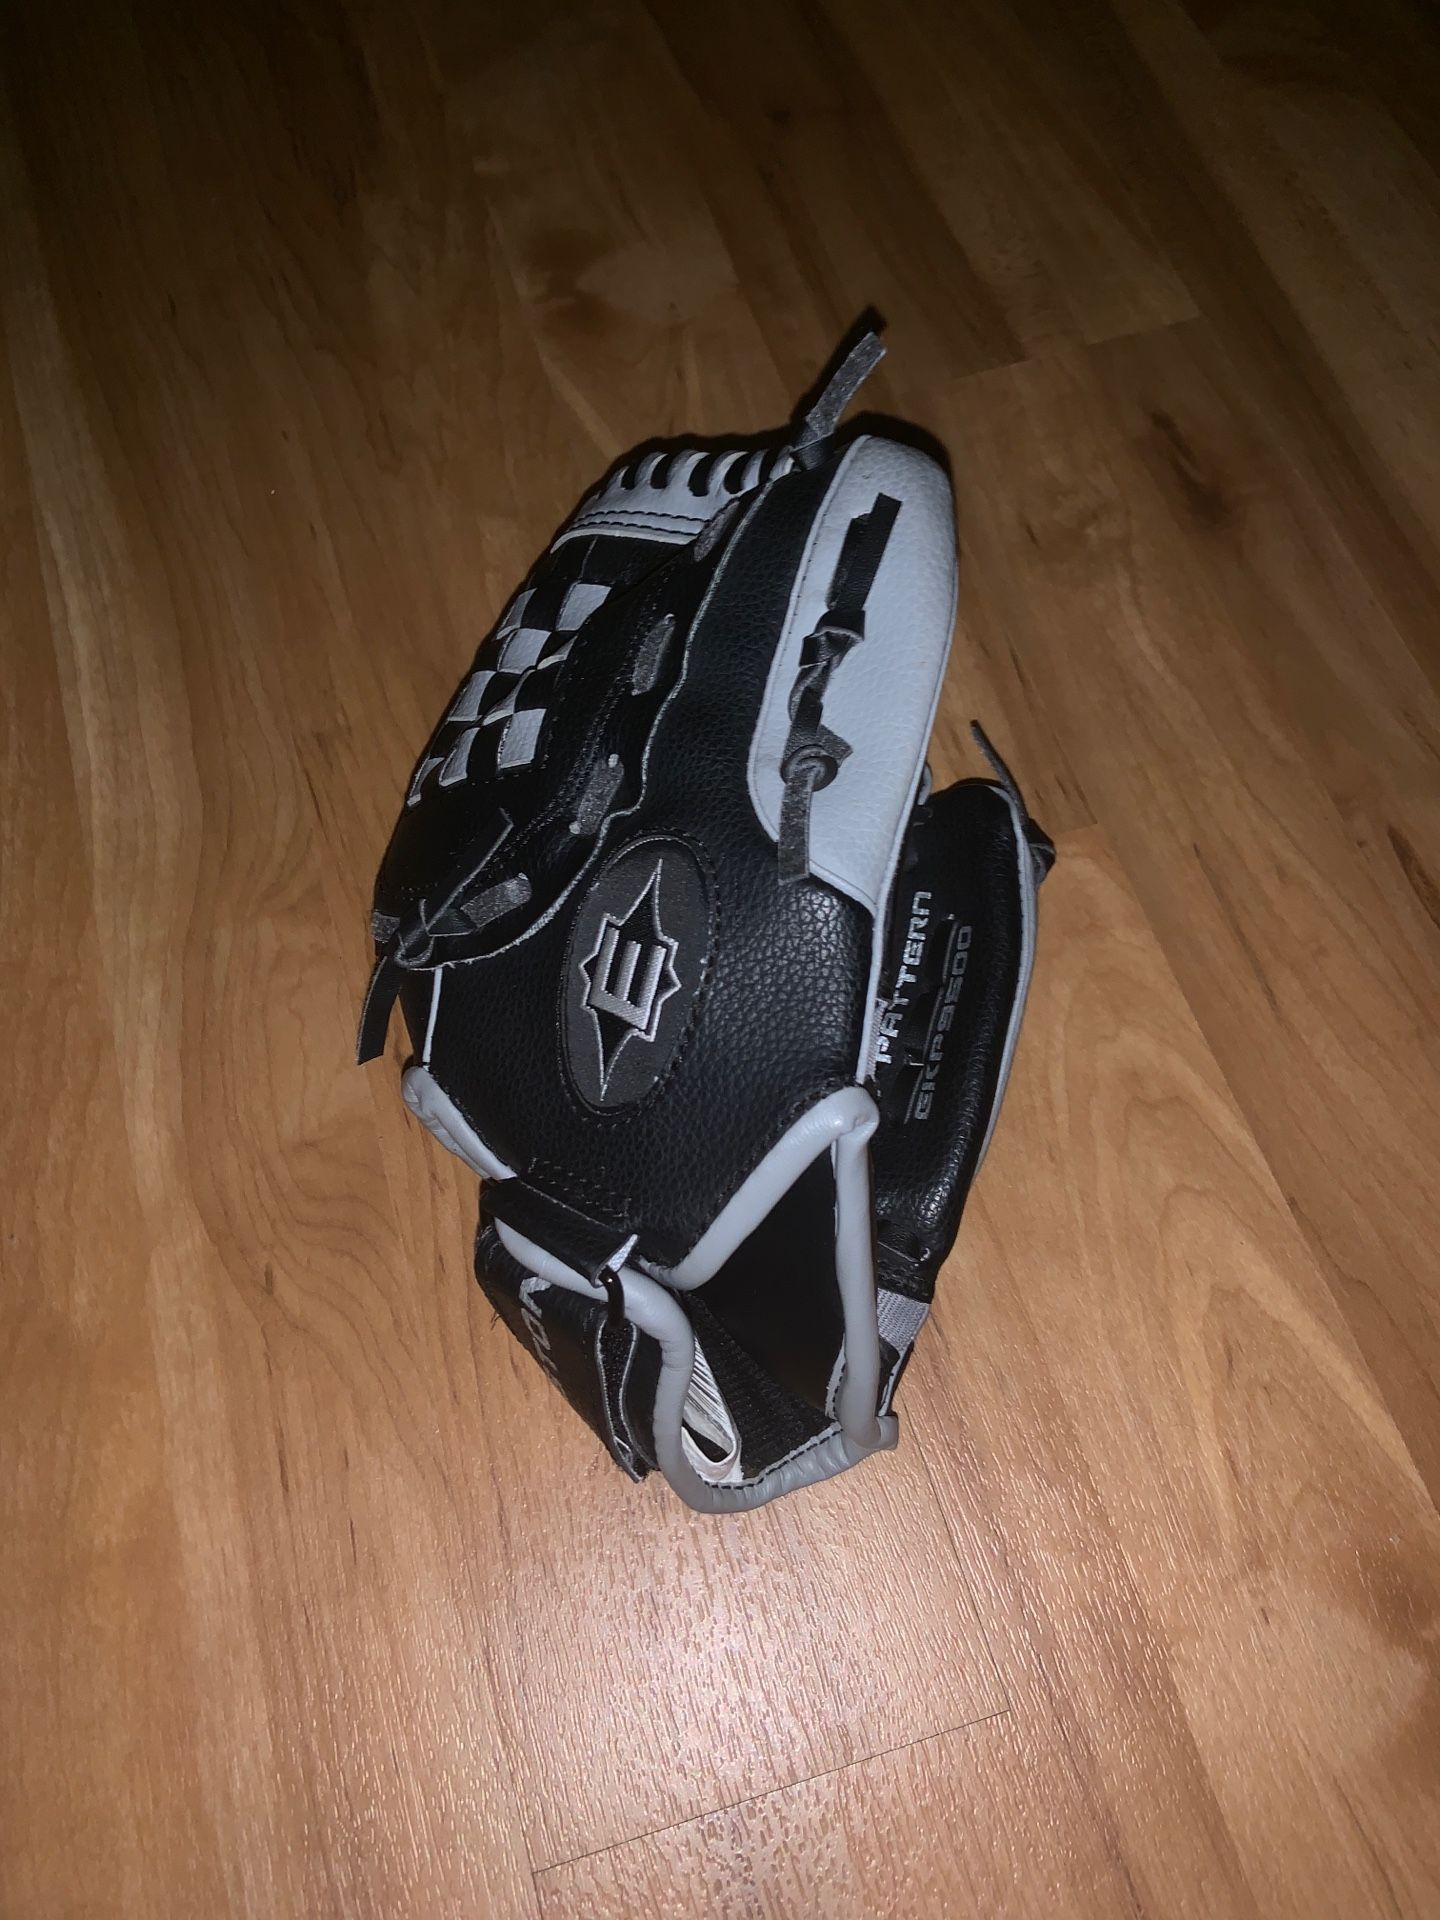 Kids baseball glove (new)